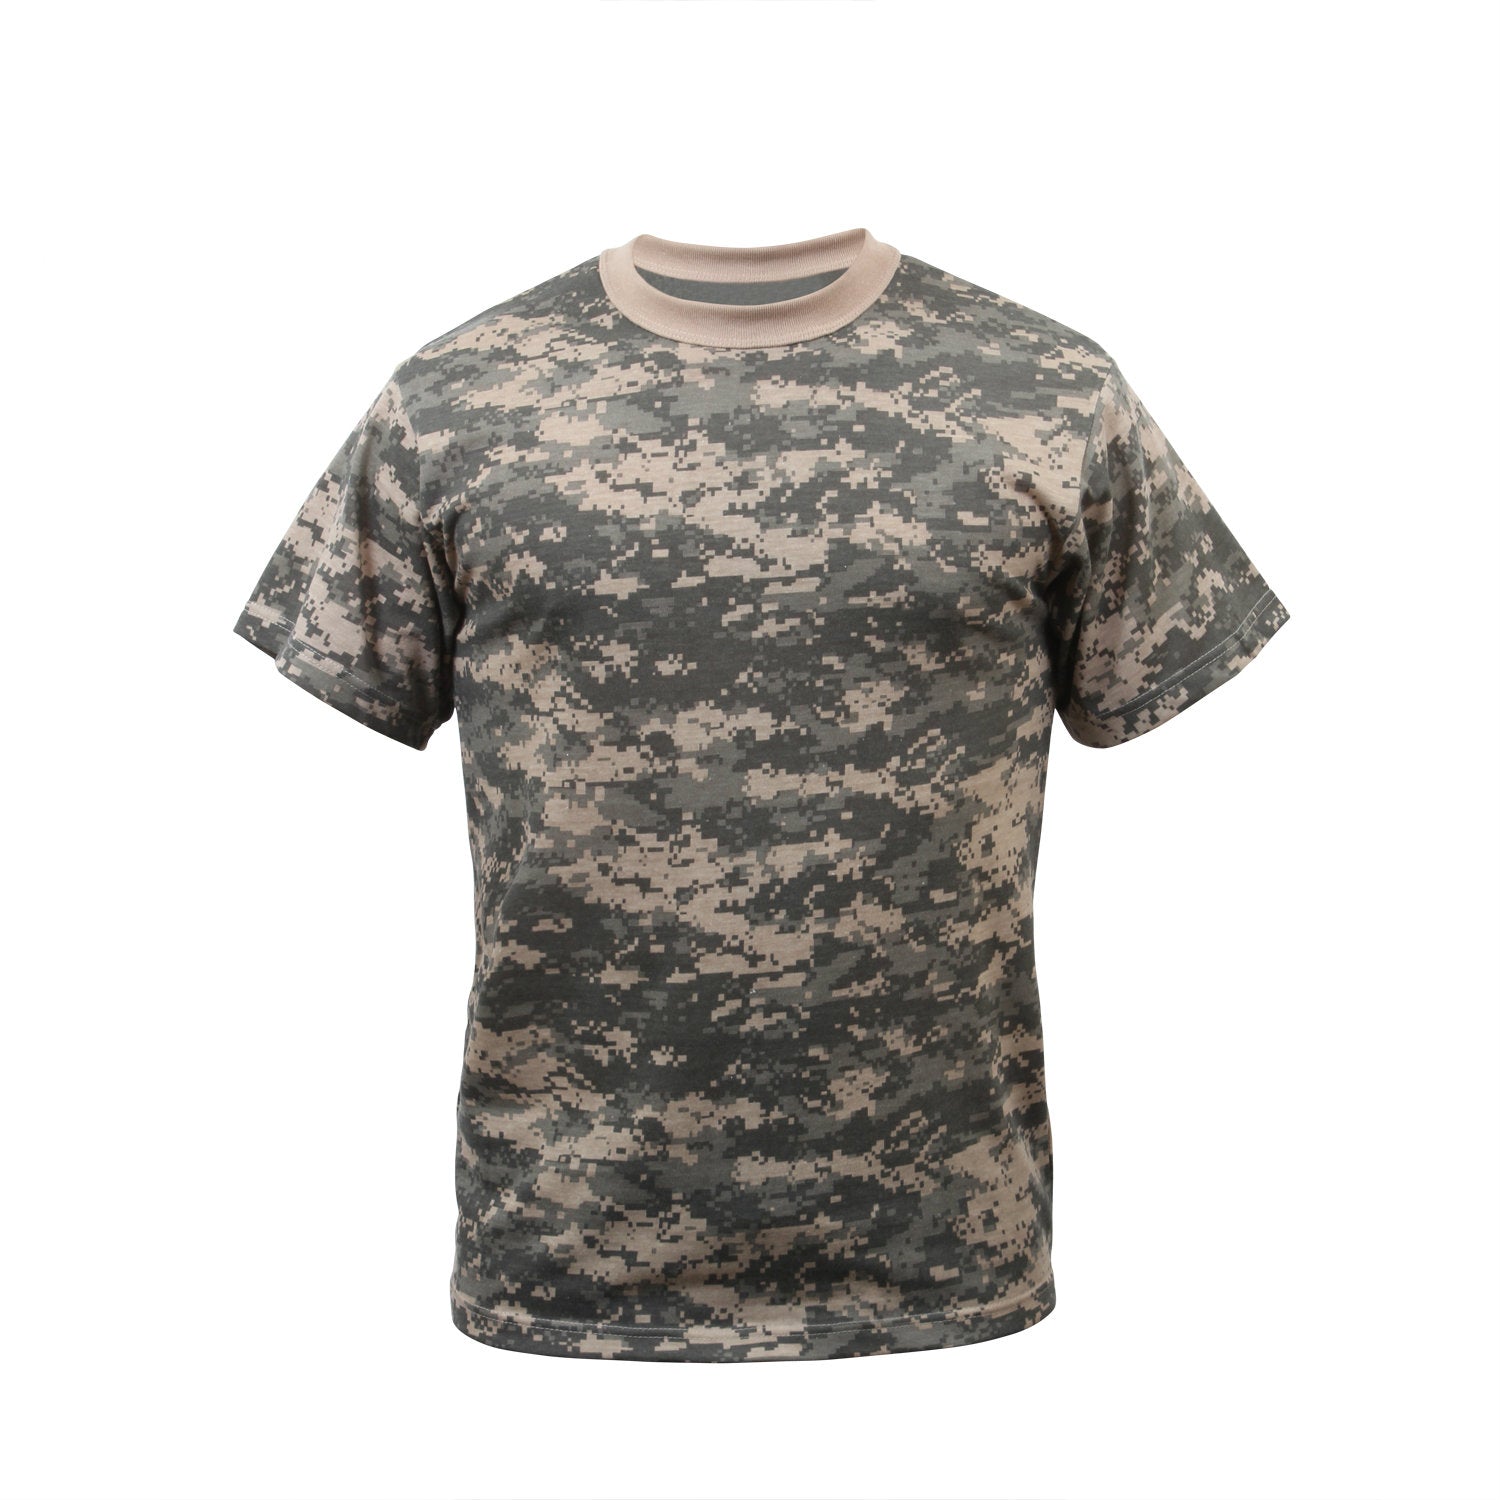 ACU Digital Camouflage T-Shirt